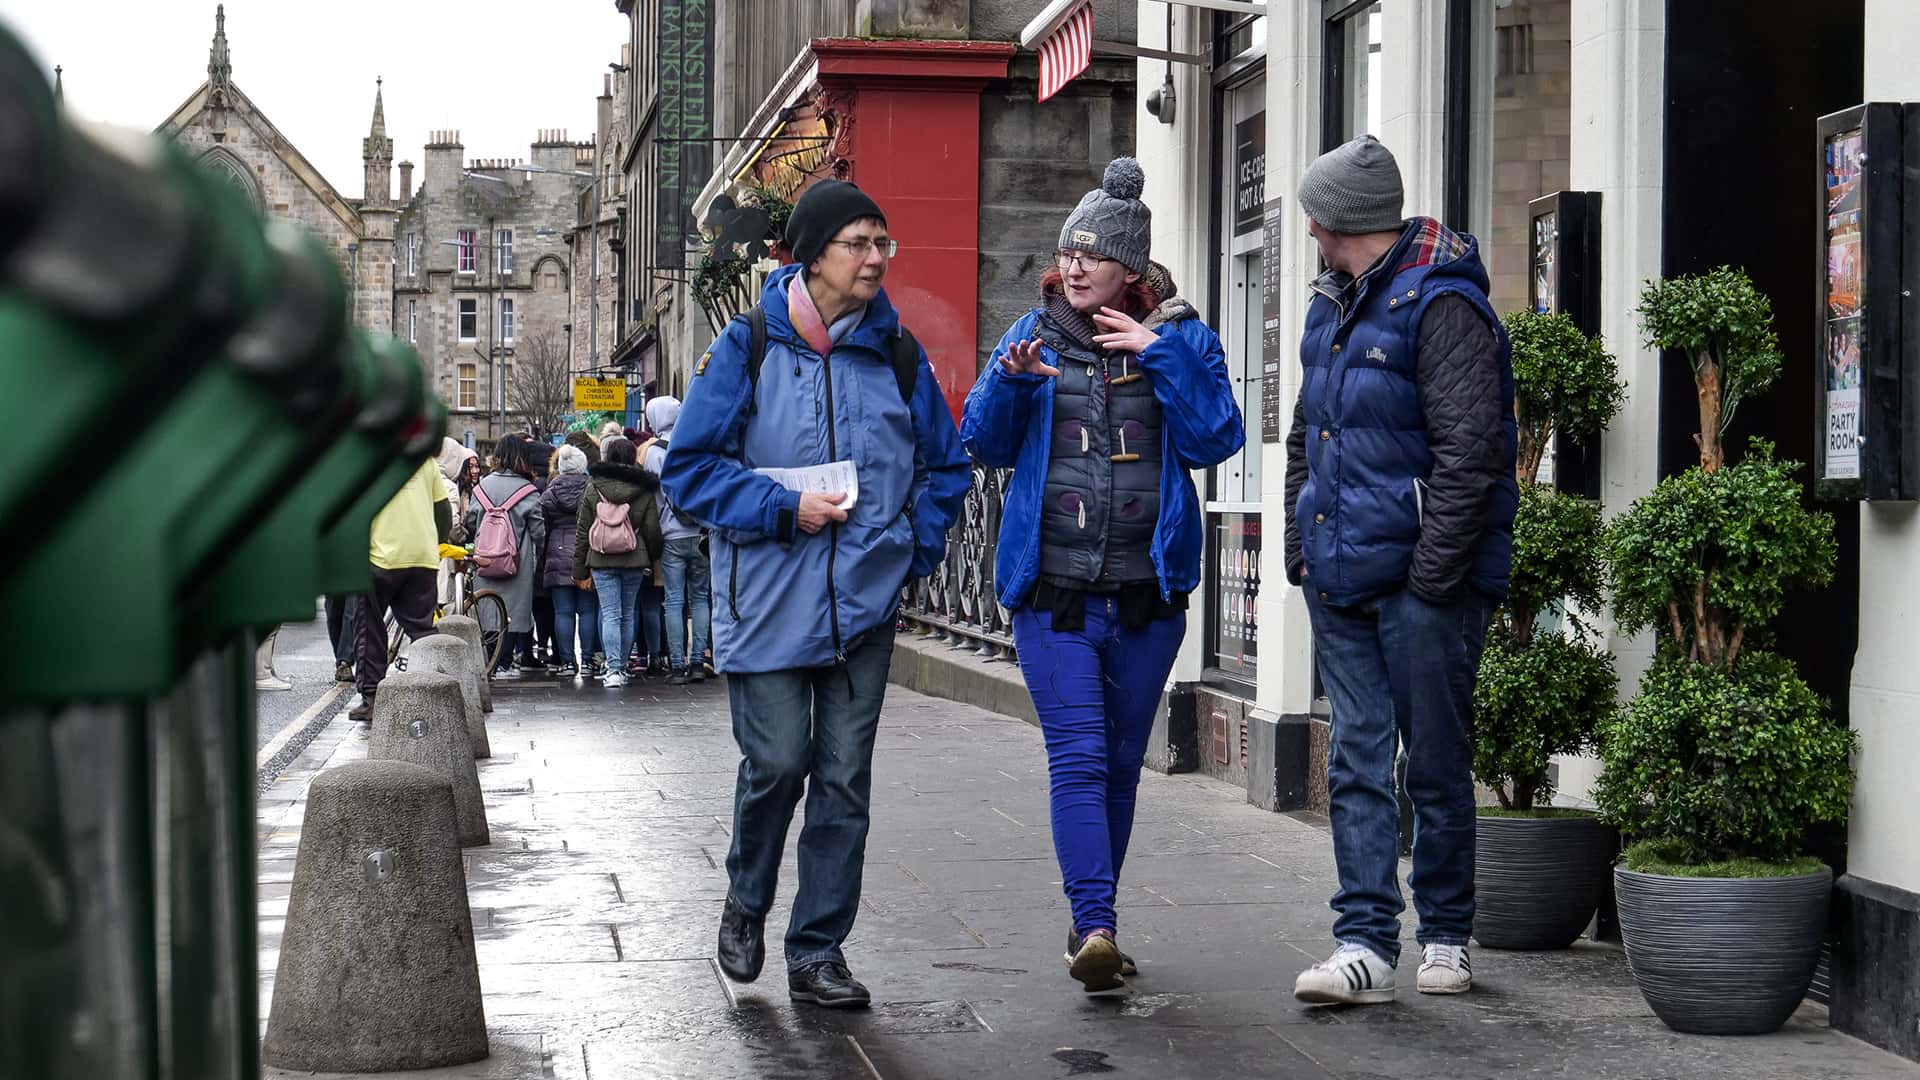 A group of people walking down a street in edinburgh.